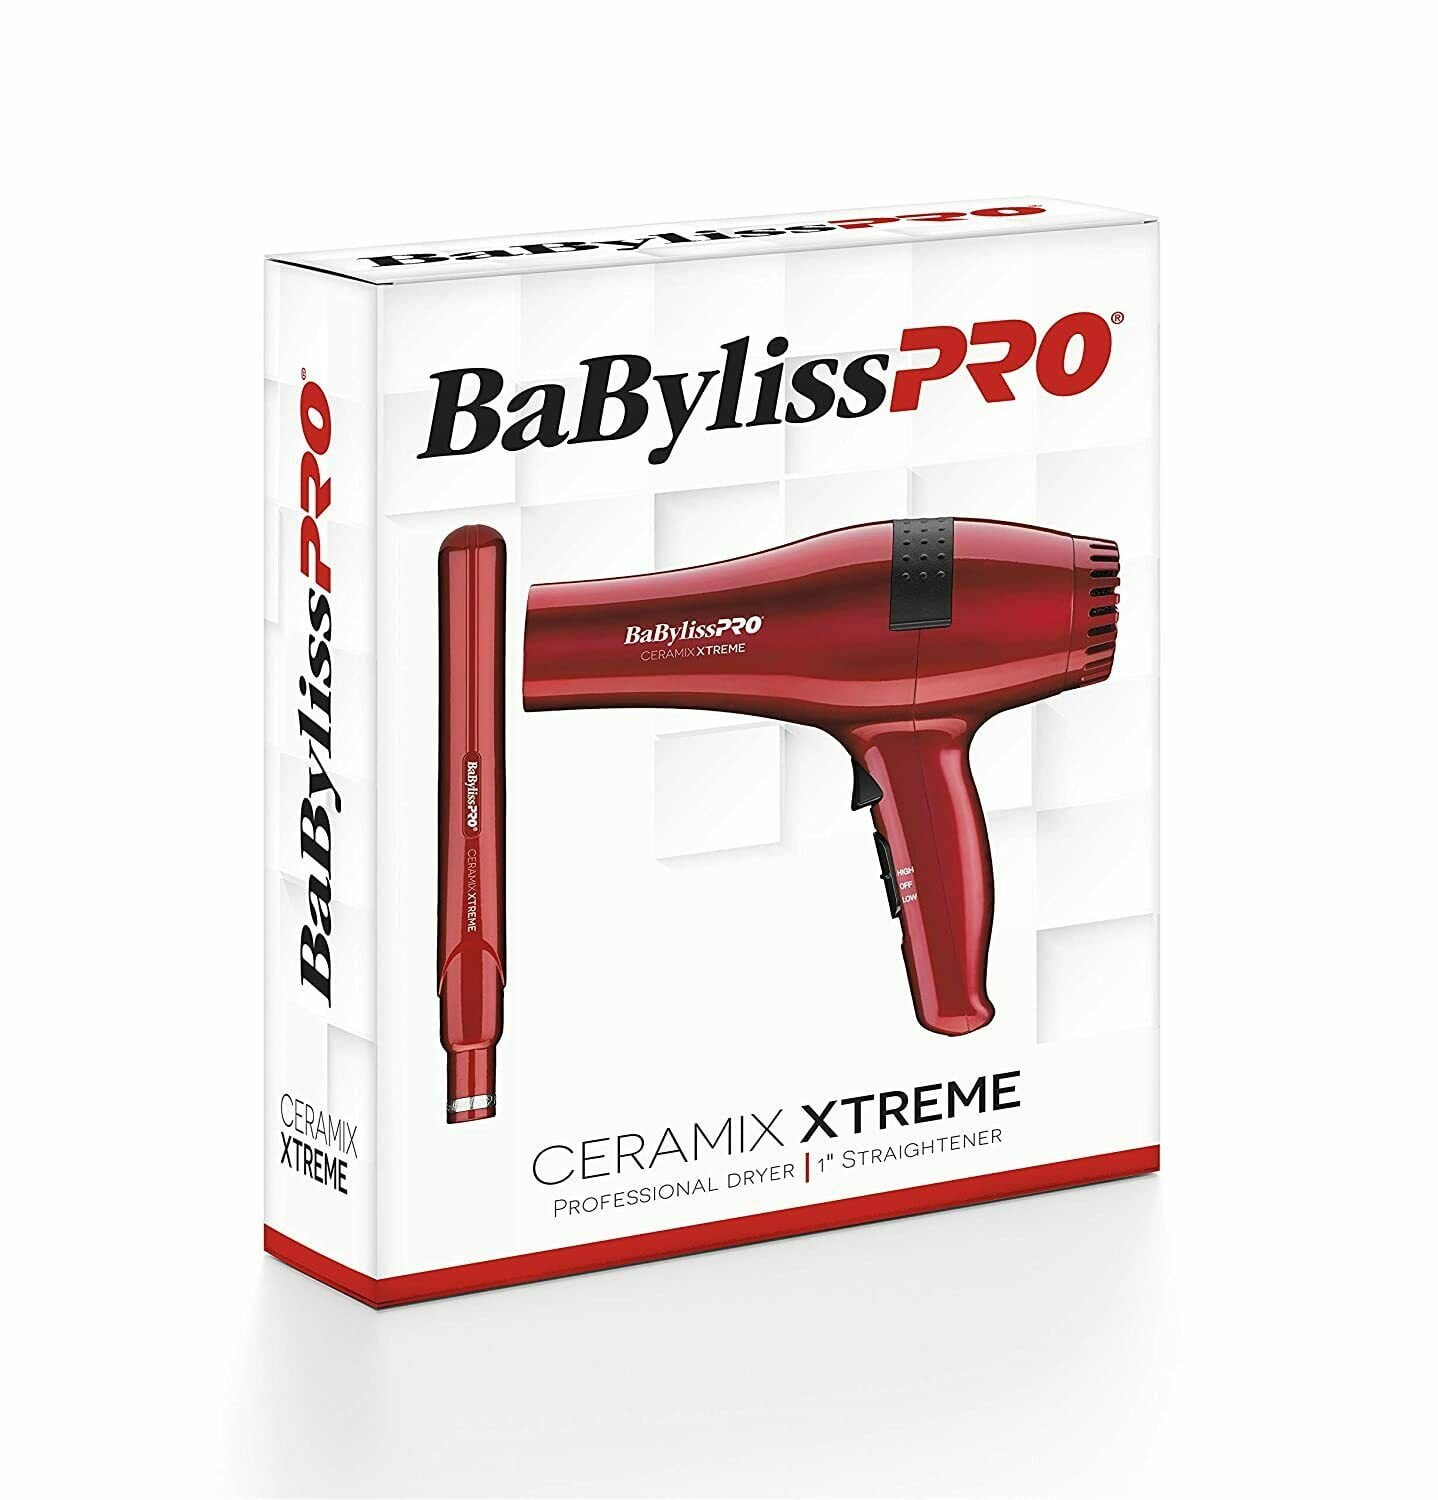 Babyliss Pro Ceramic Xtreme Hair Dryer 